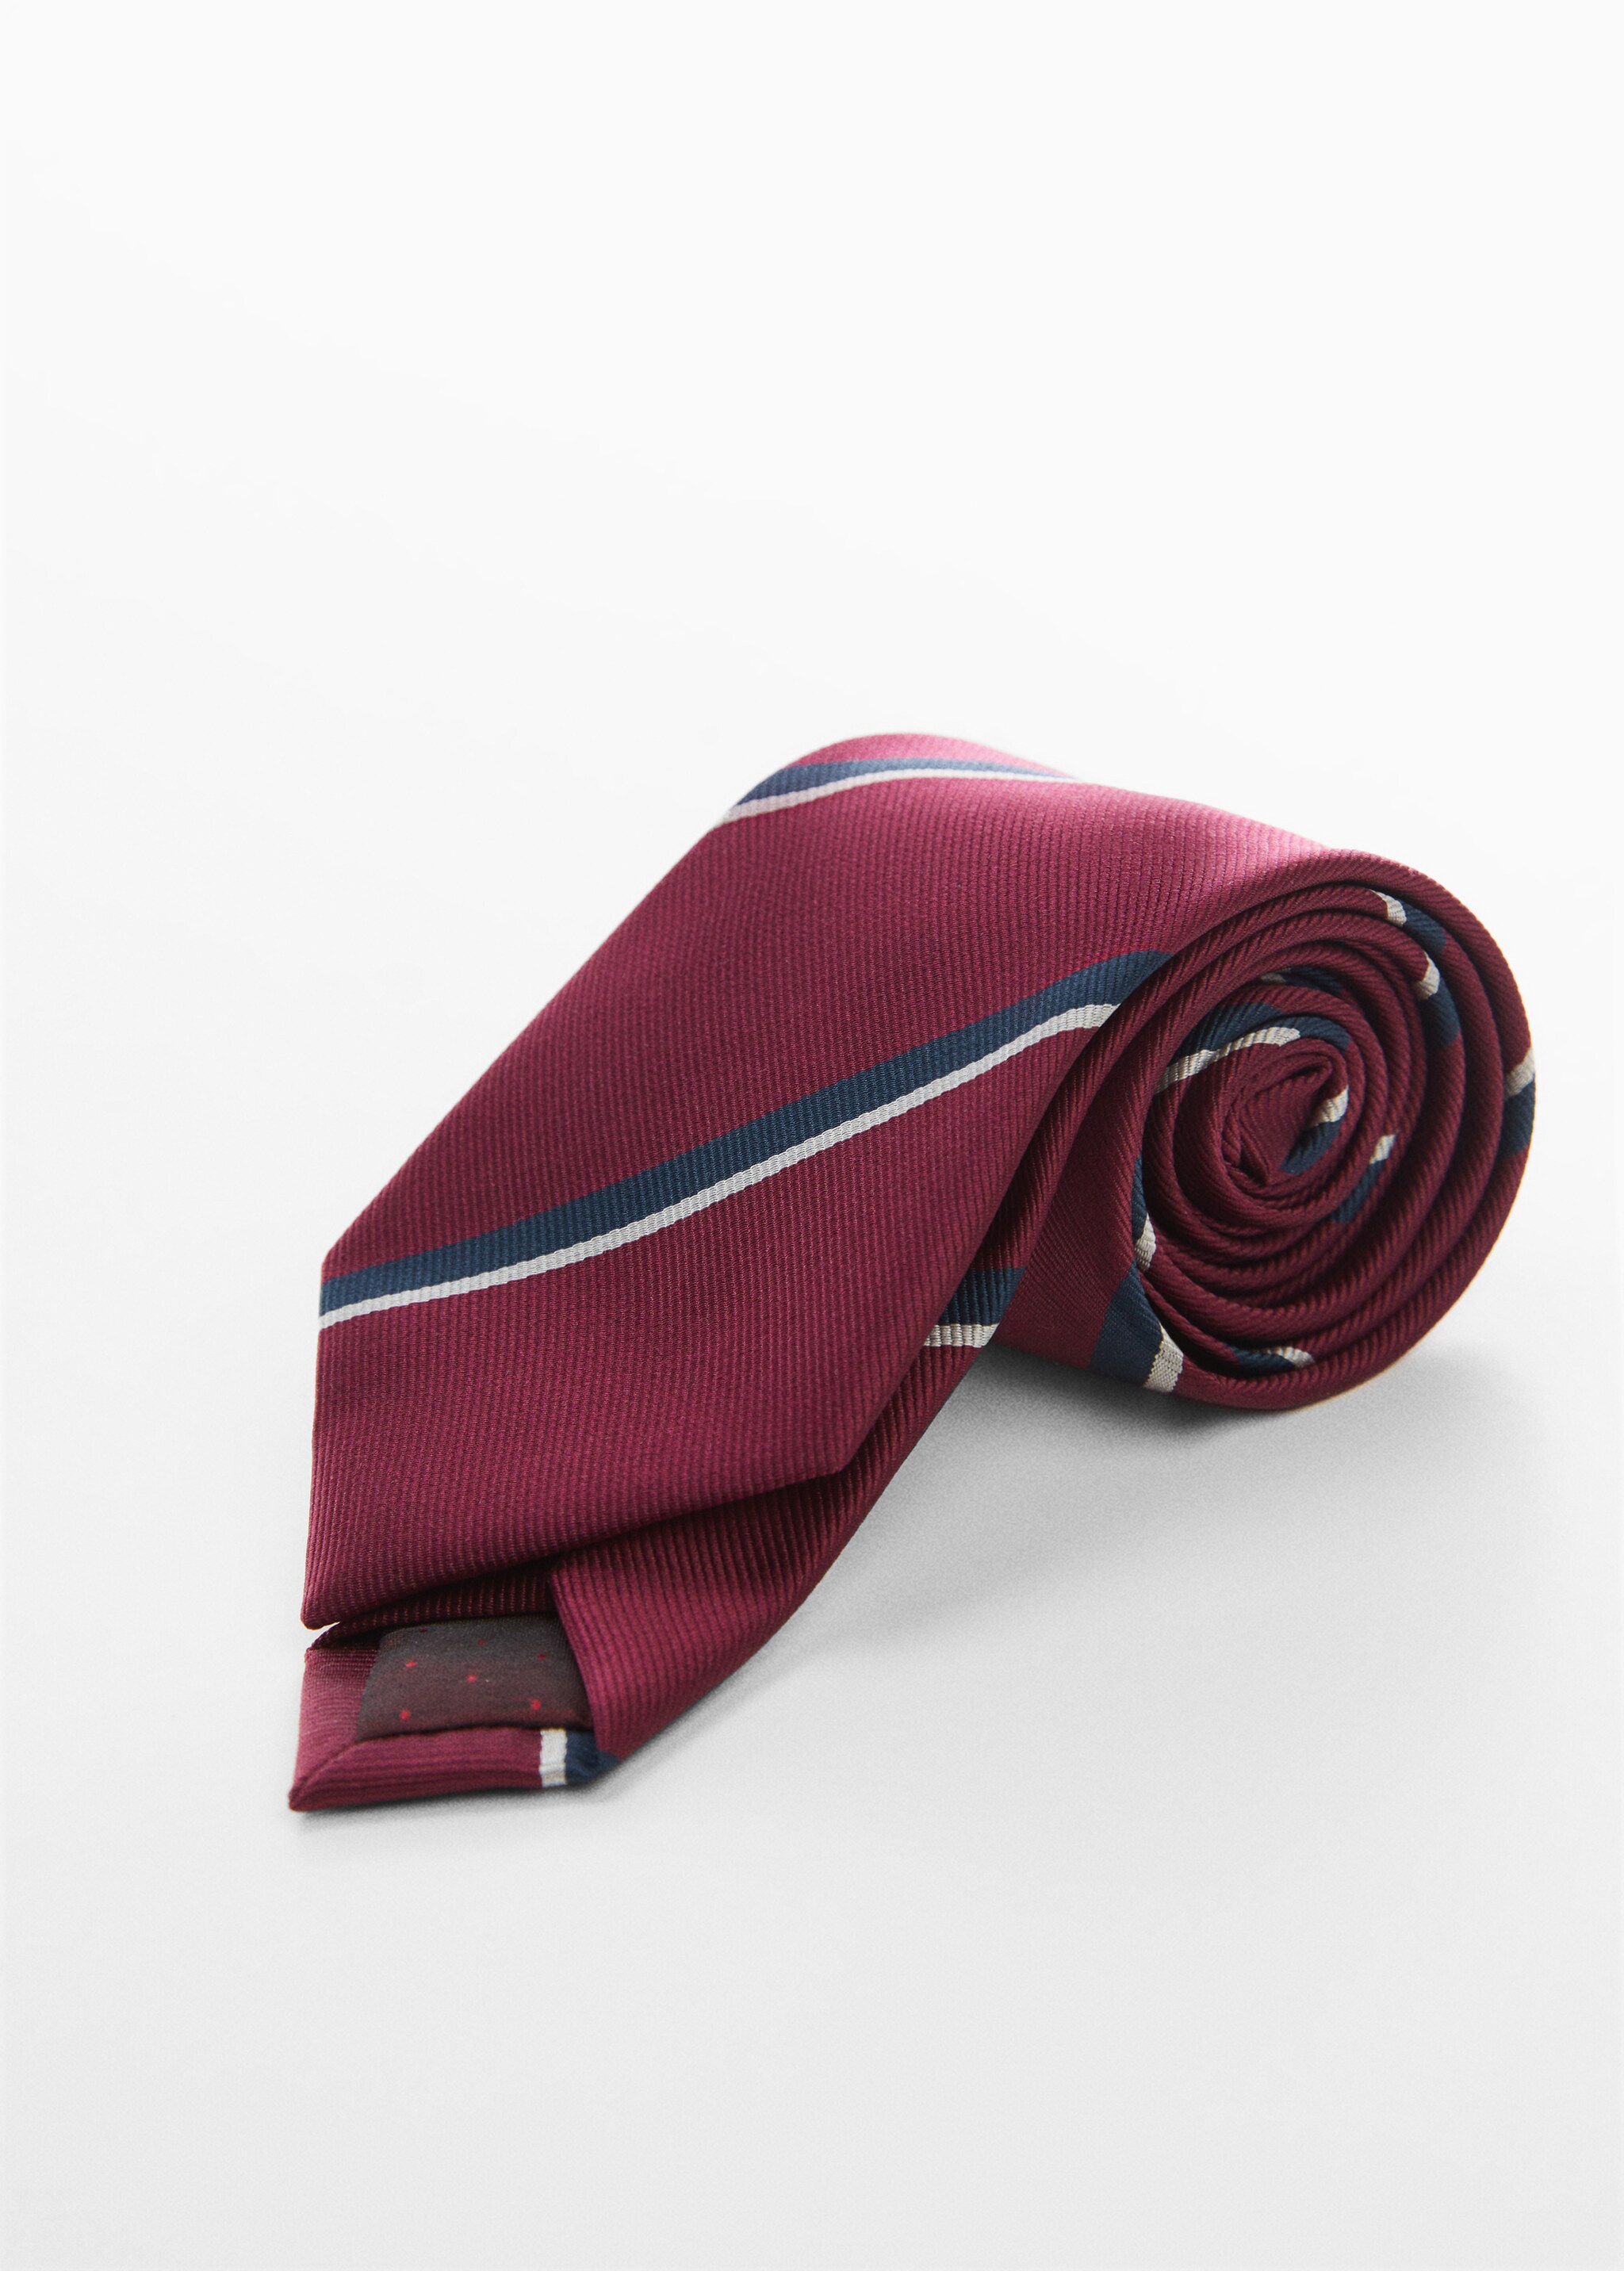 Cravate à rayures - Plan moyen